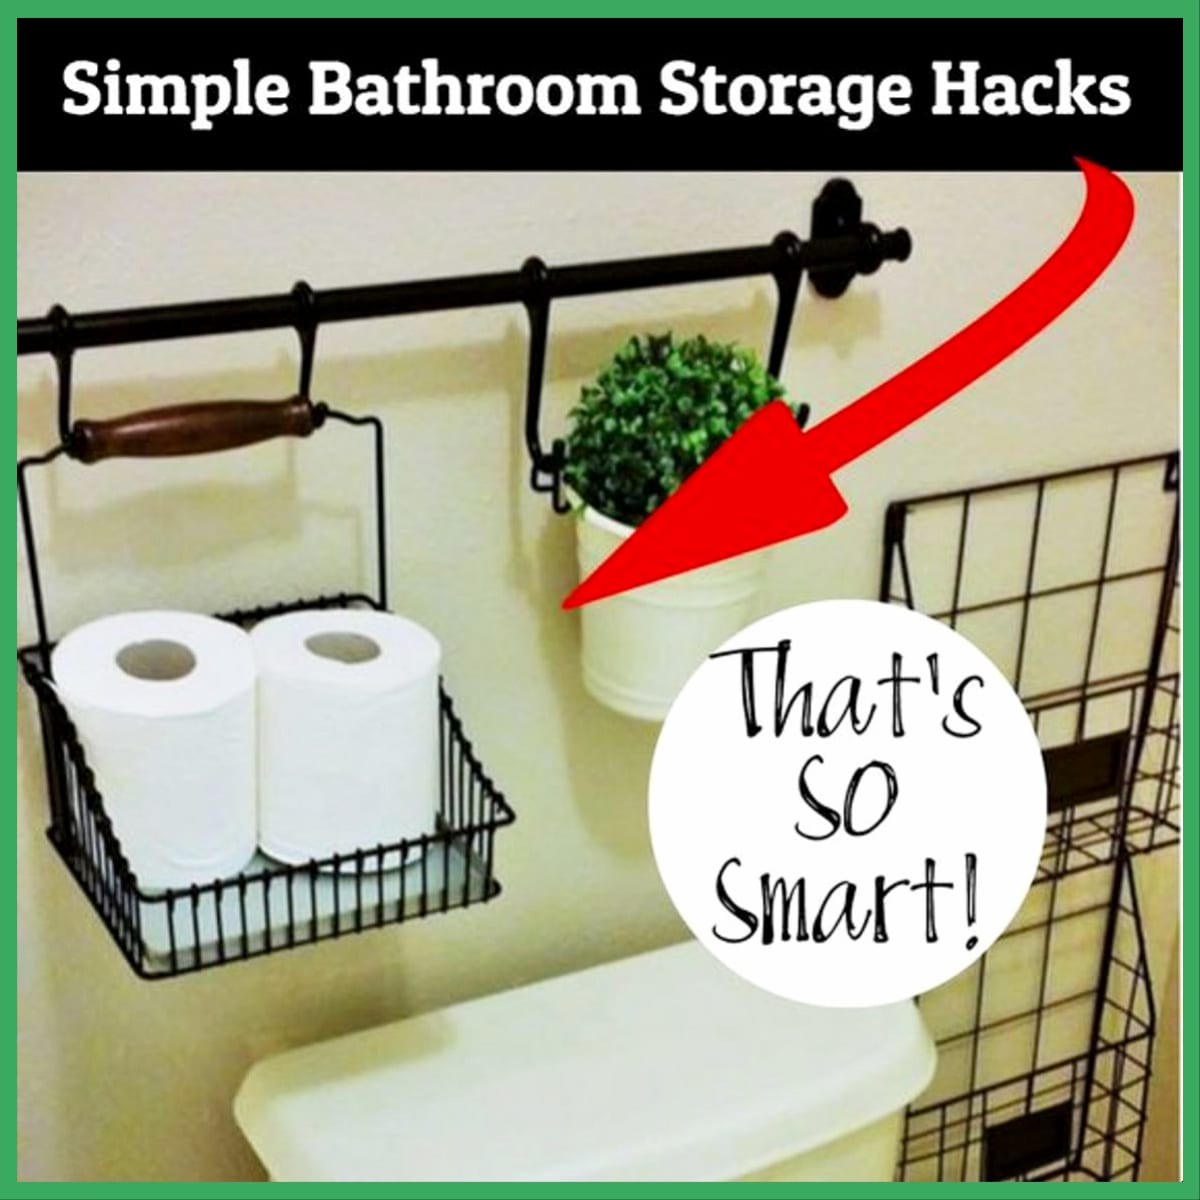 Simple bathroom storage hacks